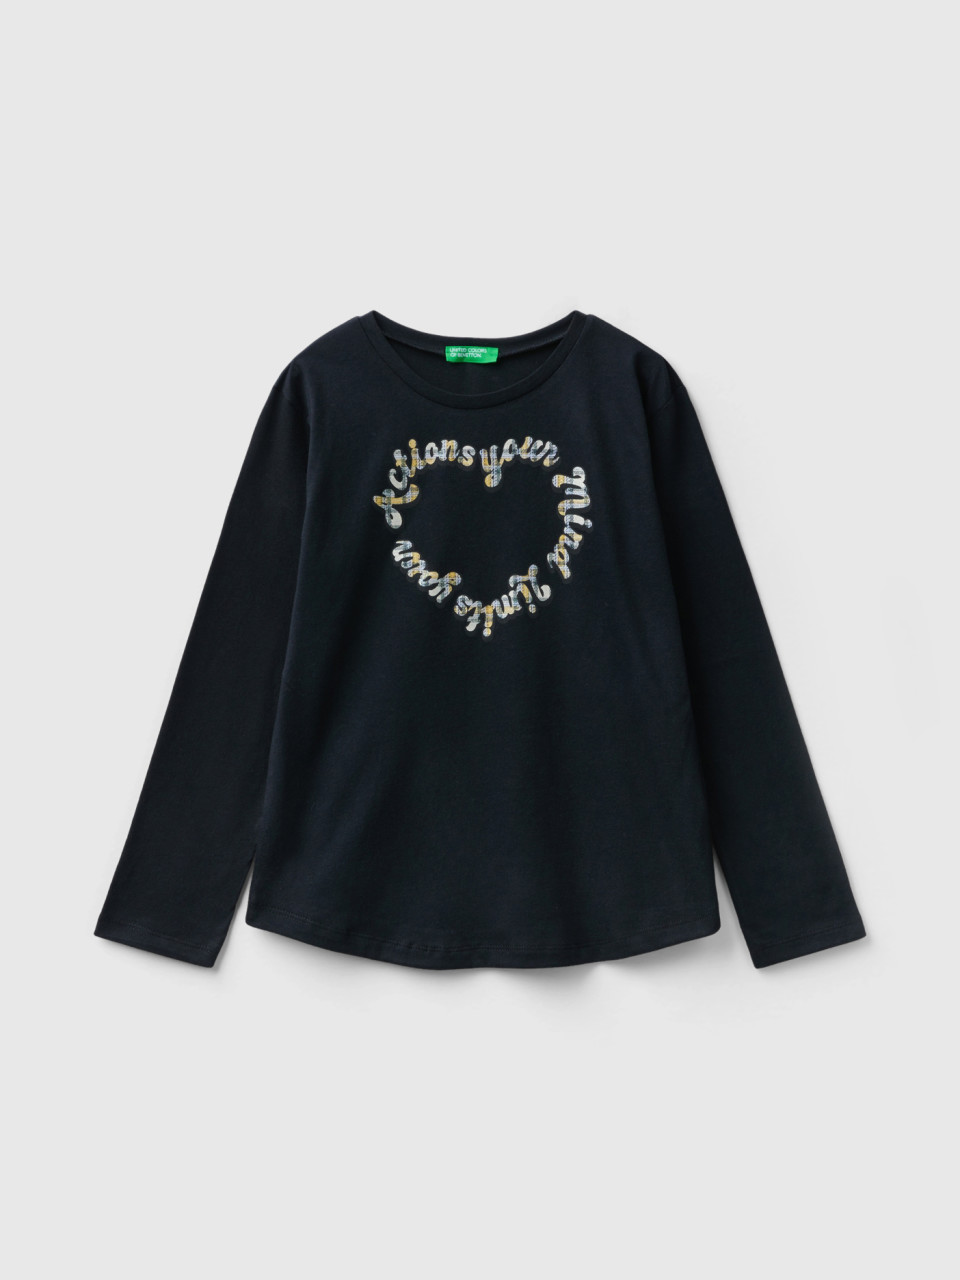 Benetton, Warm Cotton T-shirt With Glittery Print, Black, Kids